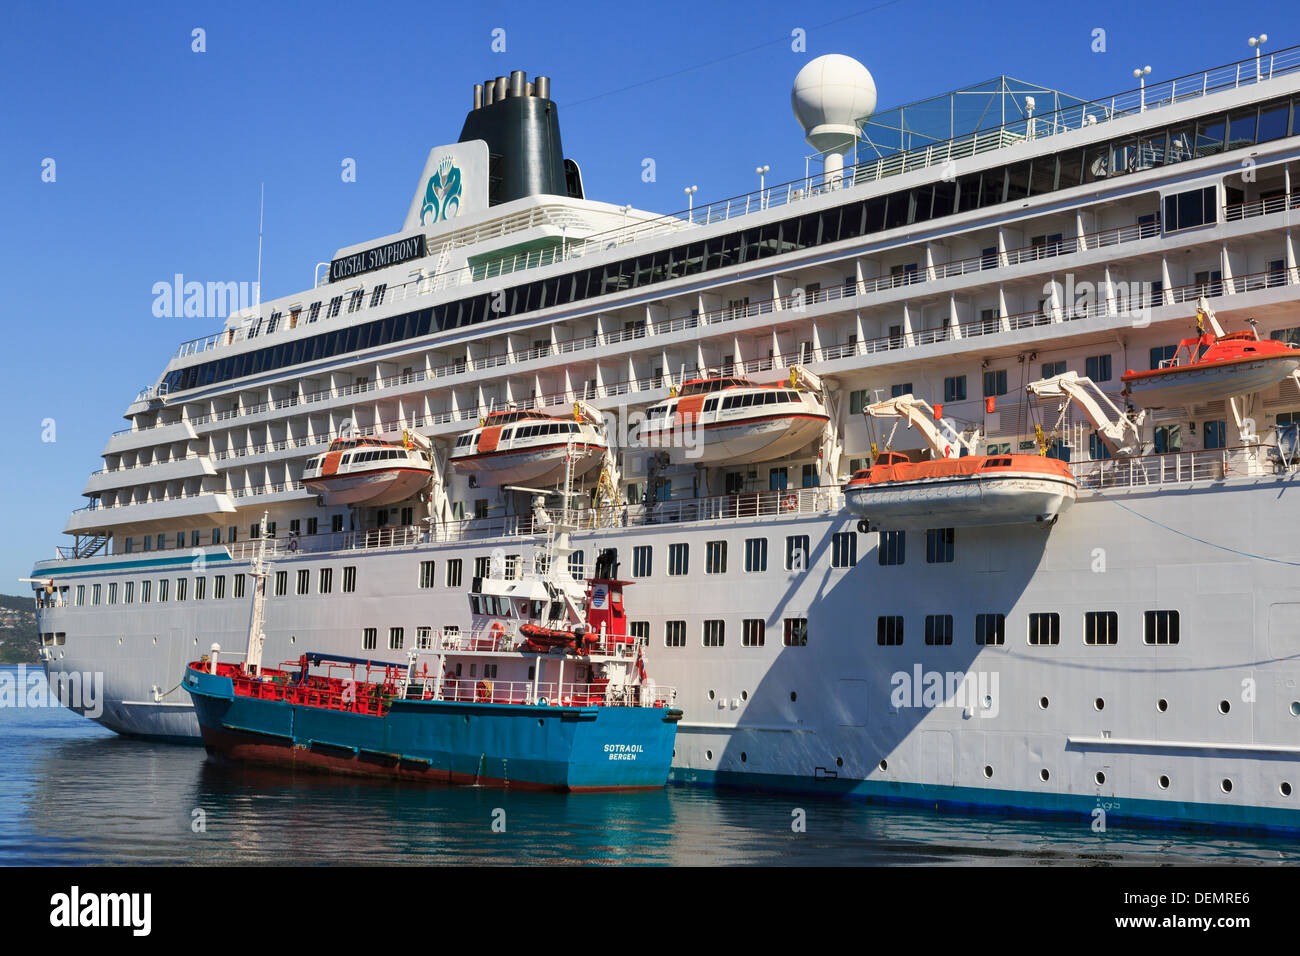 Supply boat by ocean cruise ship liner Crystal Symphony docked in Vågen harbour, Bergen, Hordaland, Norway, Scandinavia Stock Photo